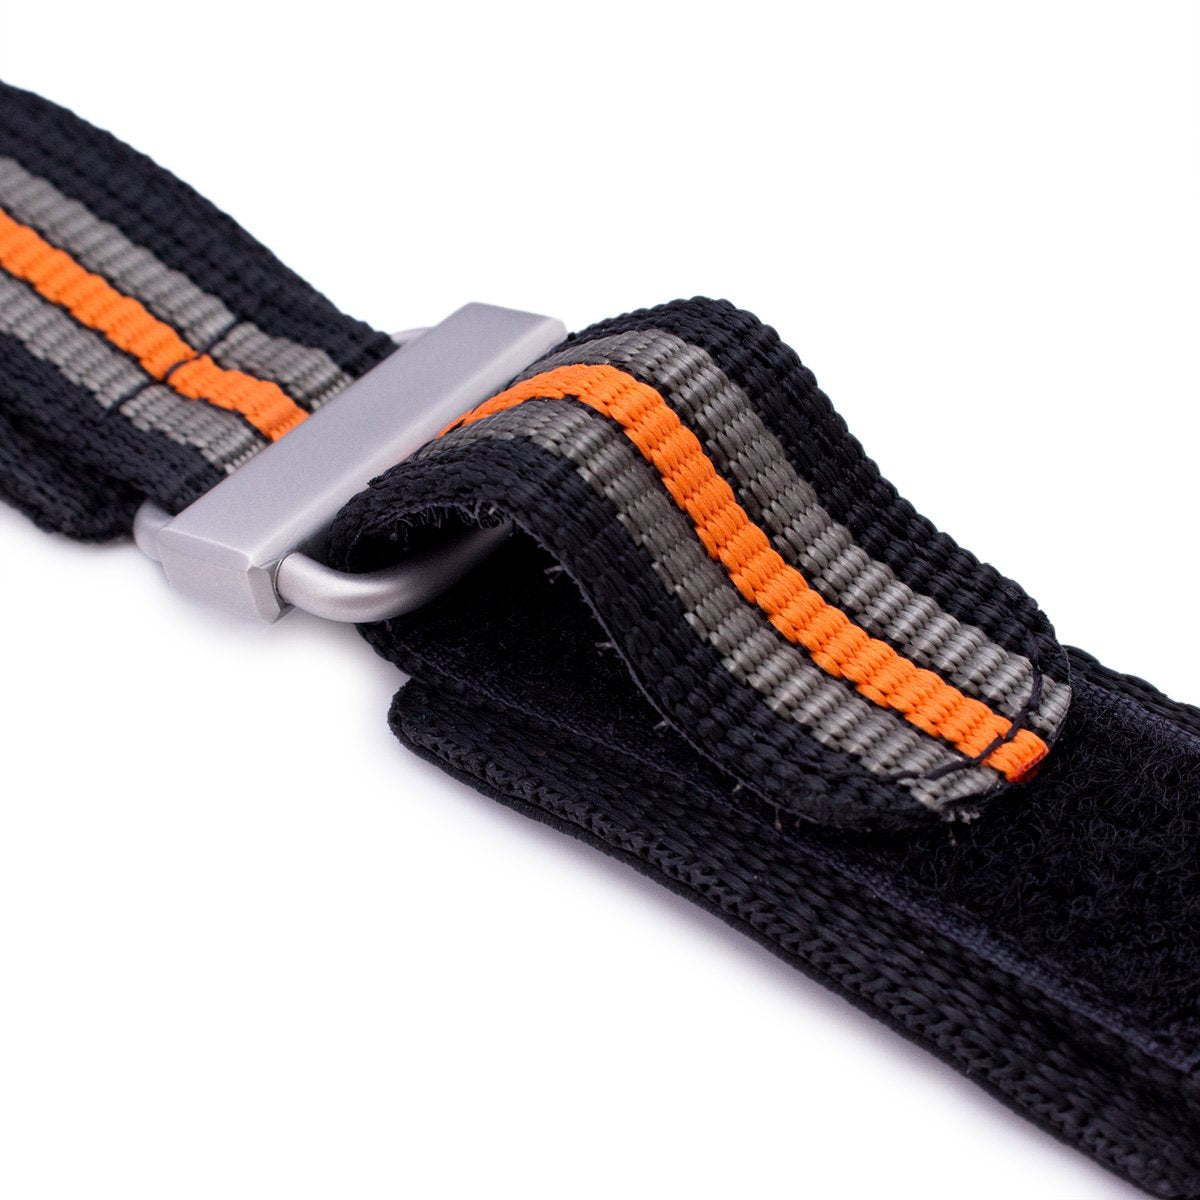 22mm MiLTAT Black Khaki & Orange Stripes 3-D Nylon Velcro Fastener Watch Strap Sandblasted Buckle Strapcode Watch Bands